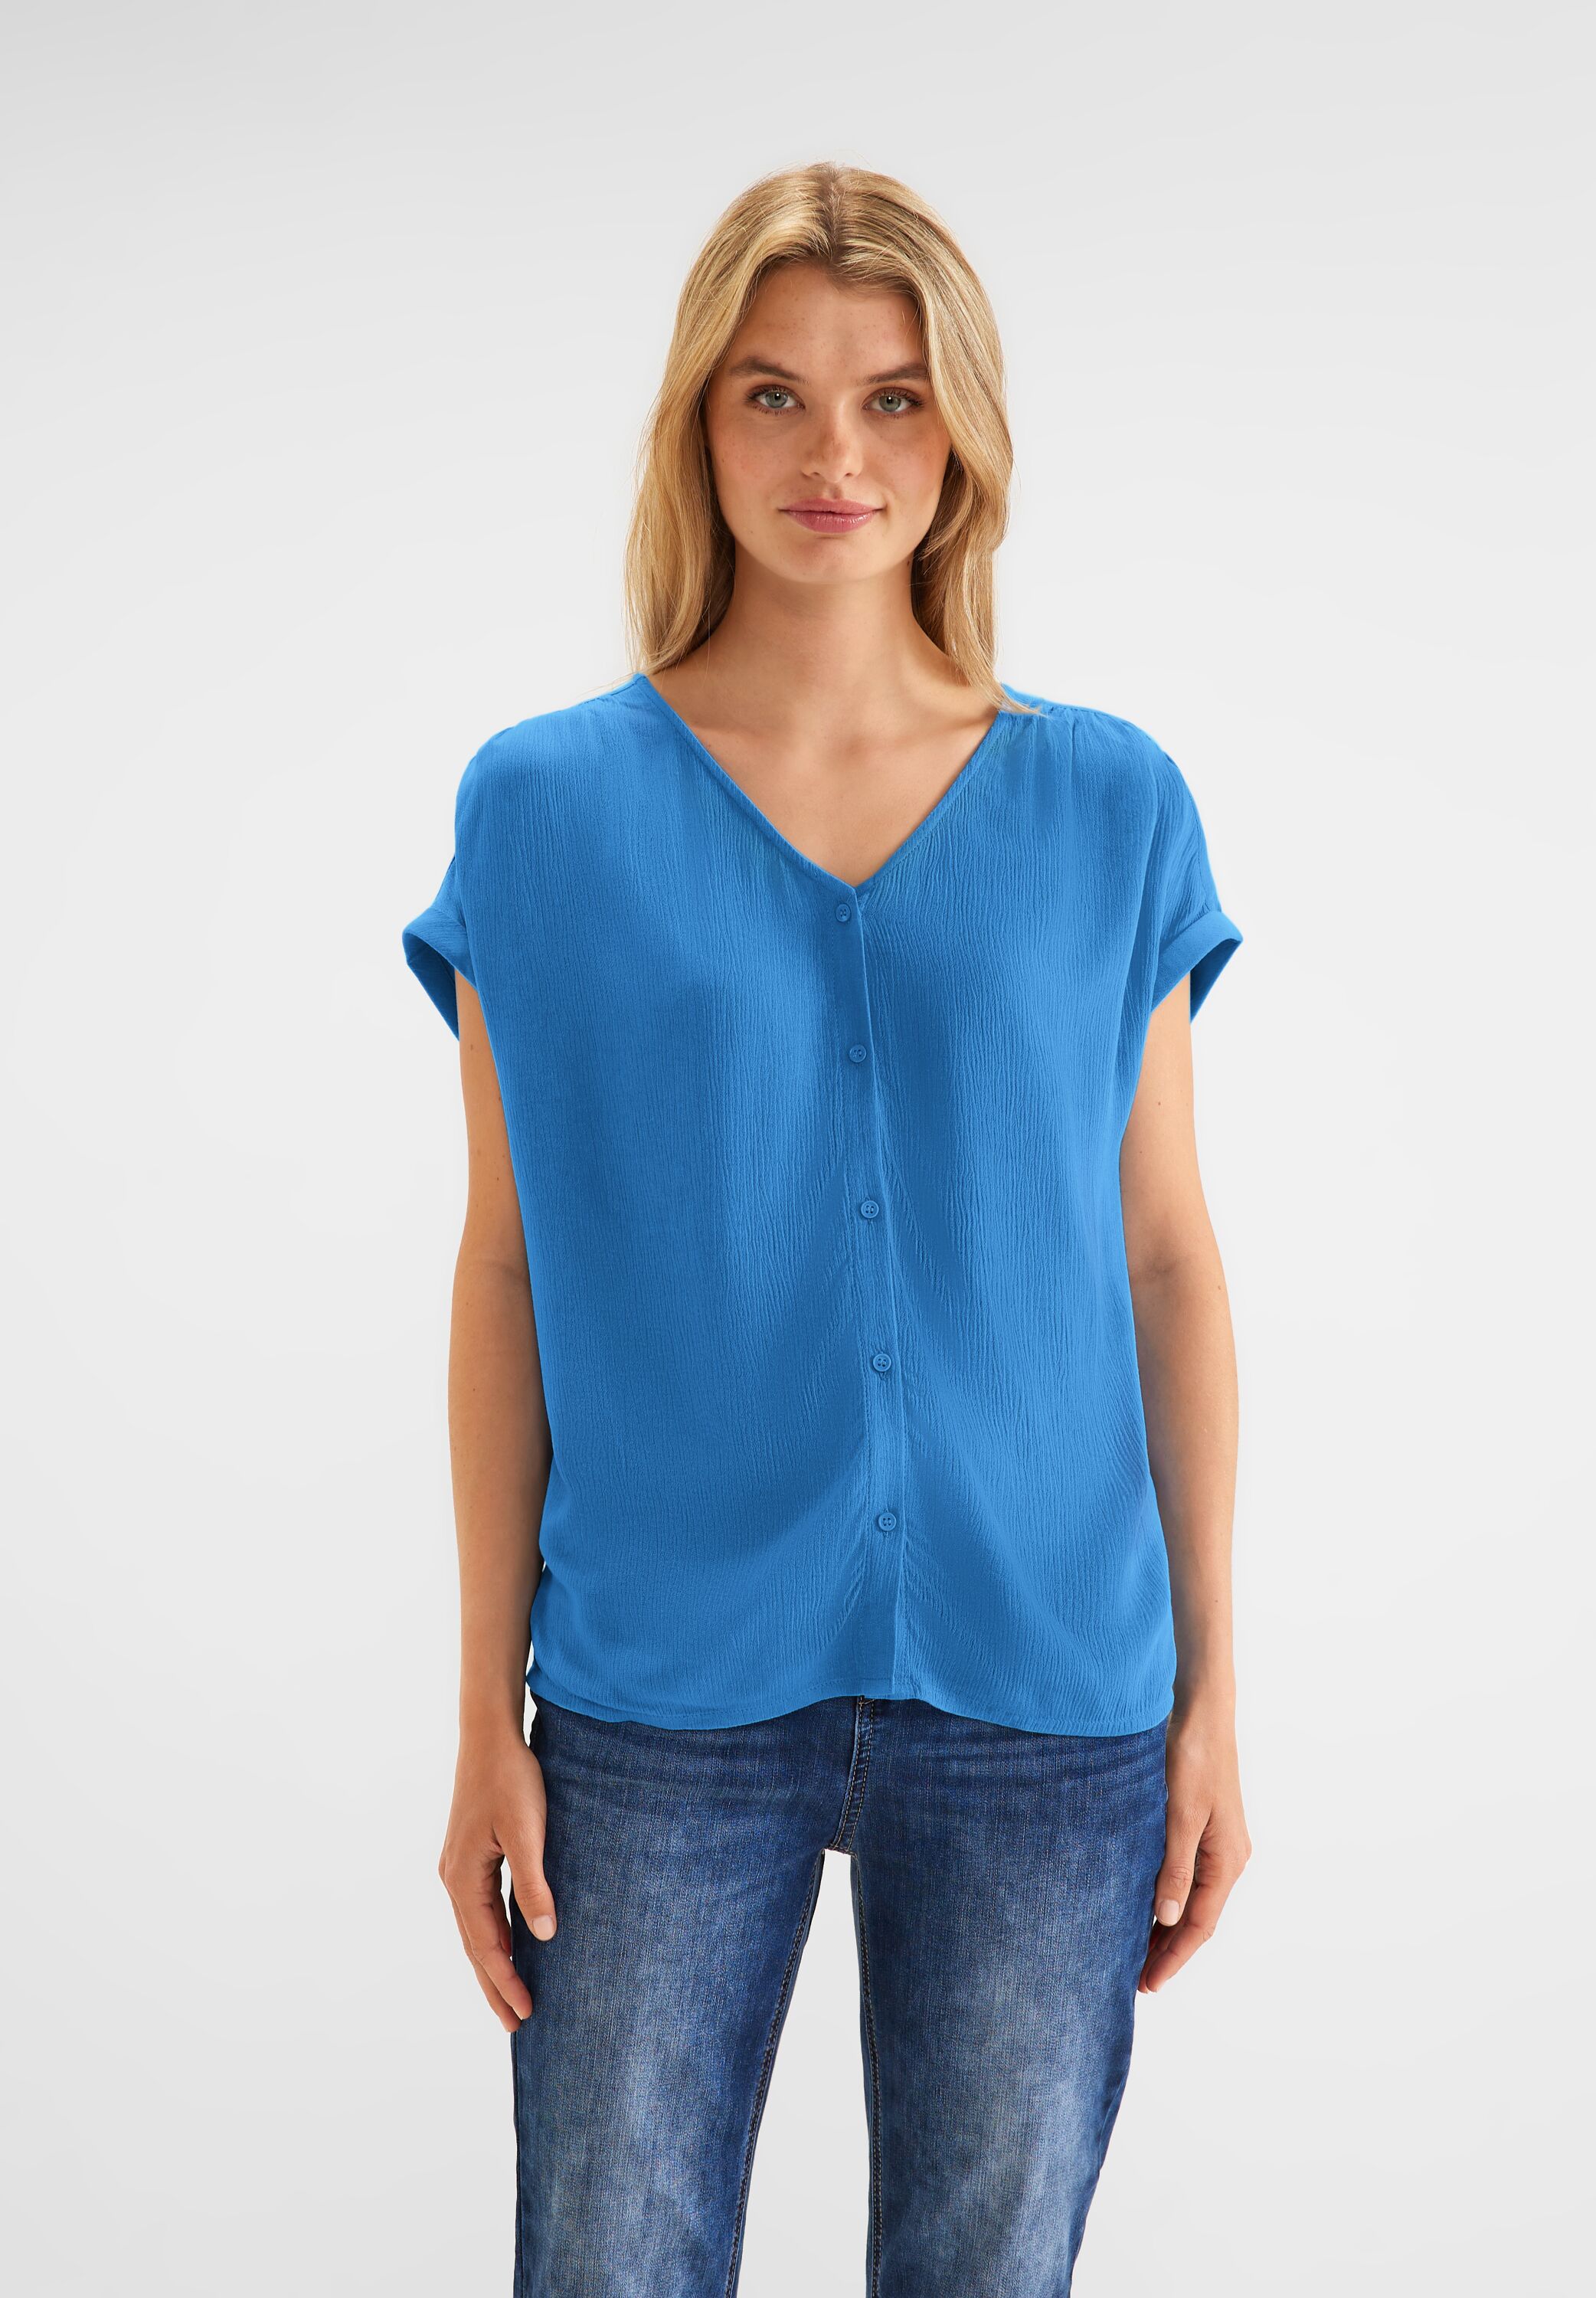 Bay Street Shirt CONCEPT - Mode Blue SALE in A320023-14915 reduziert One im